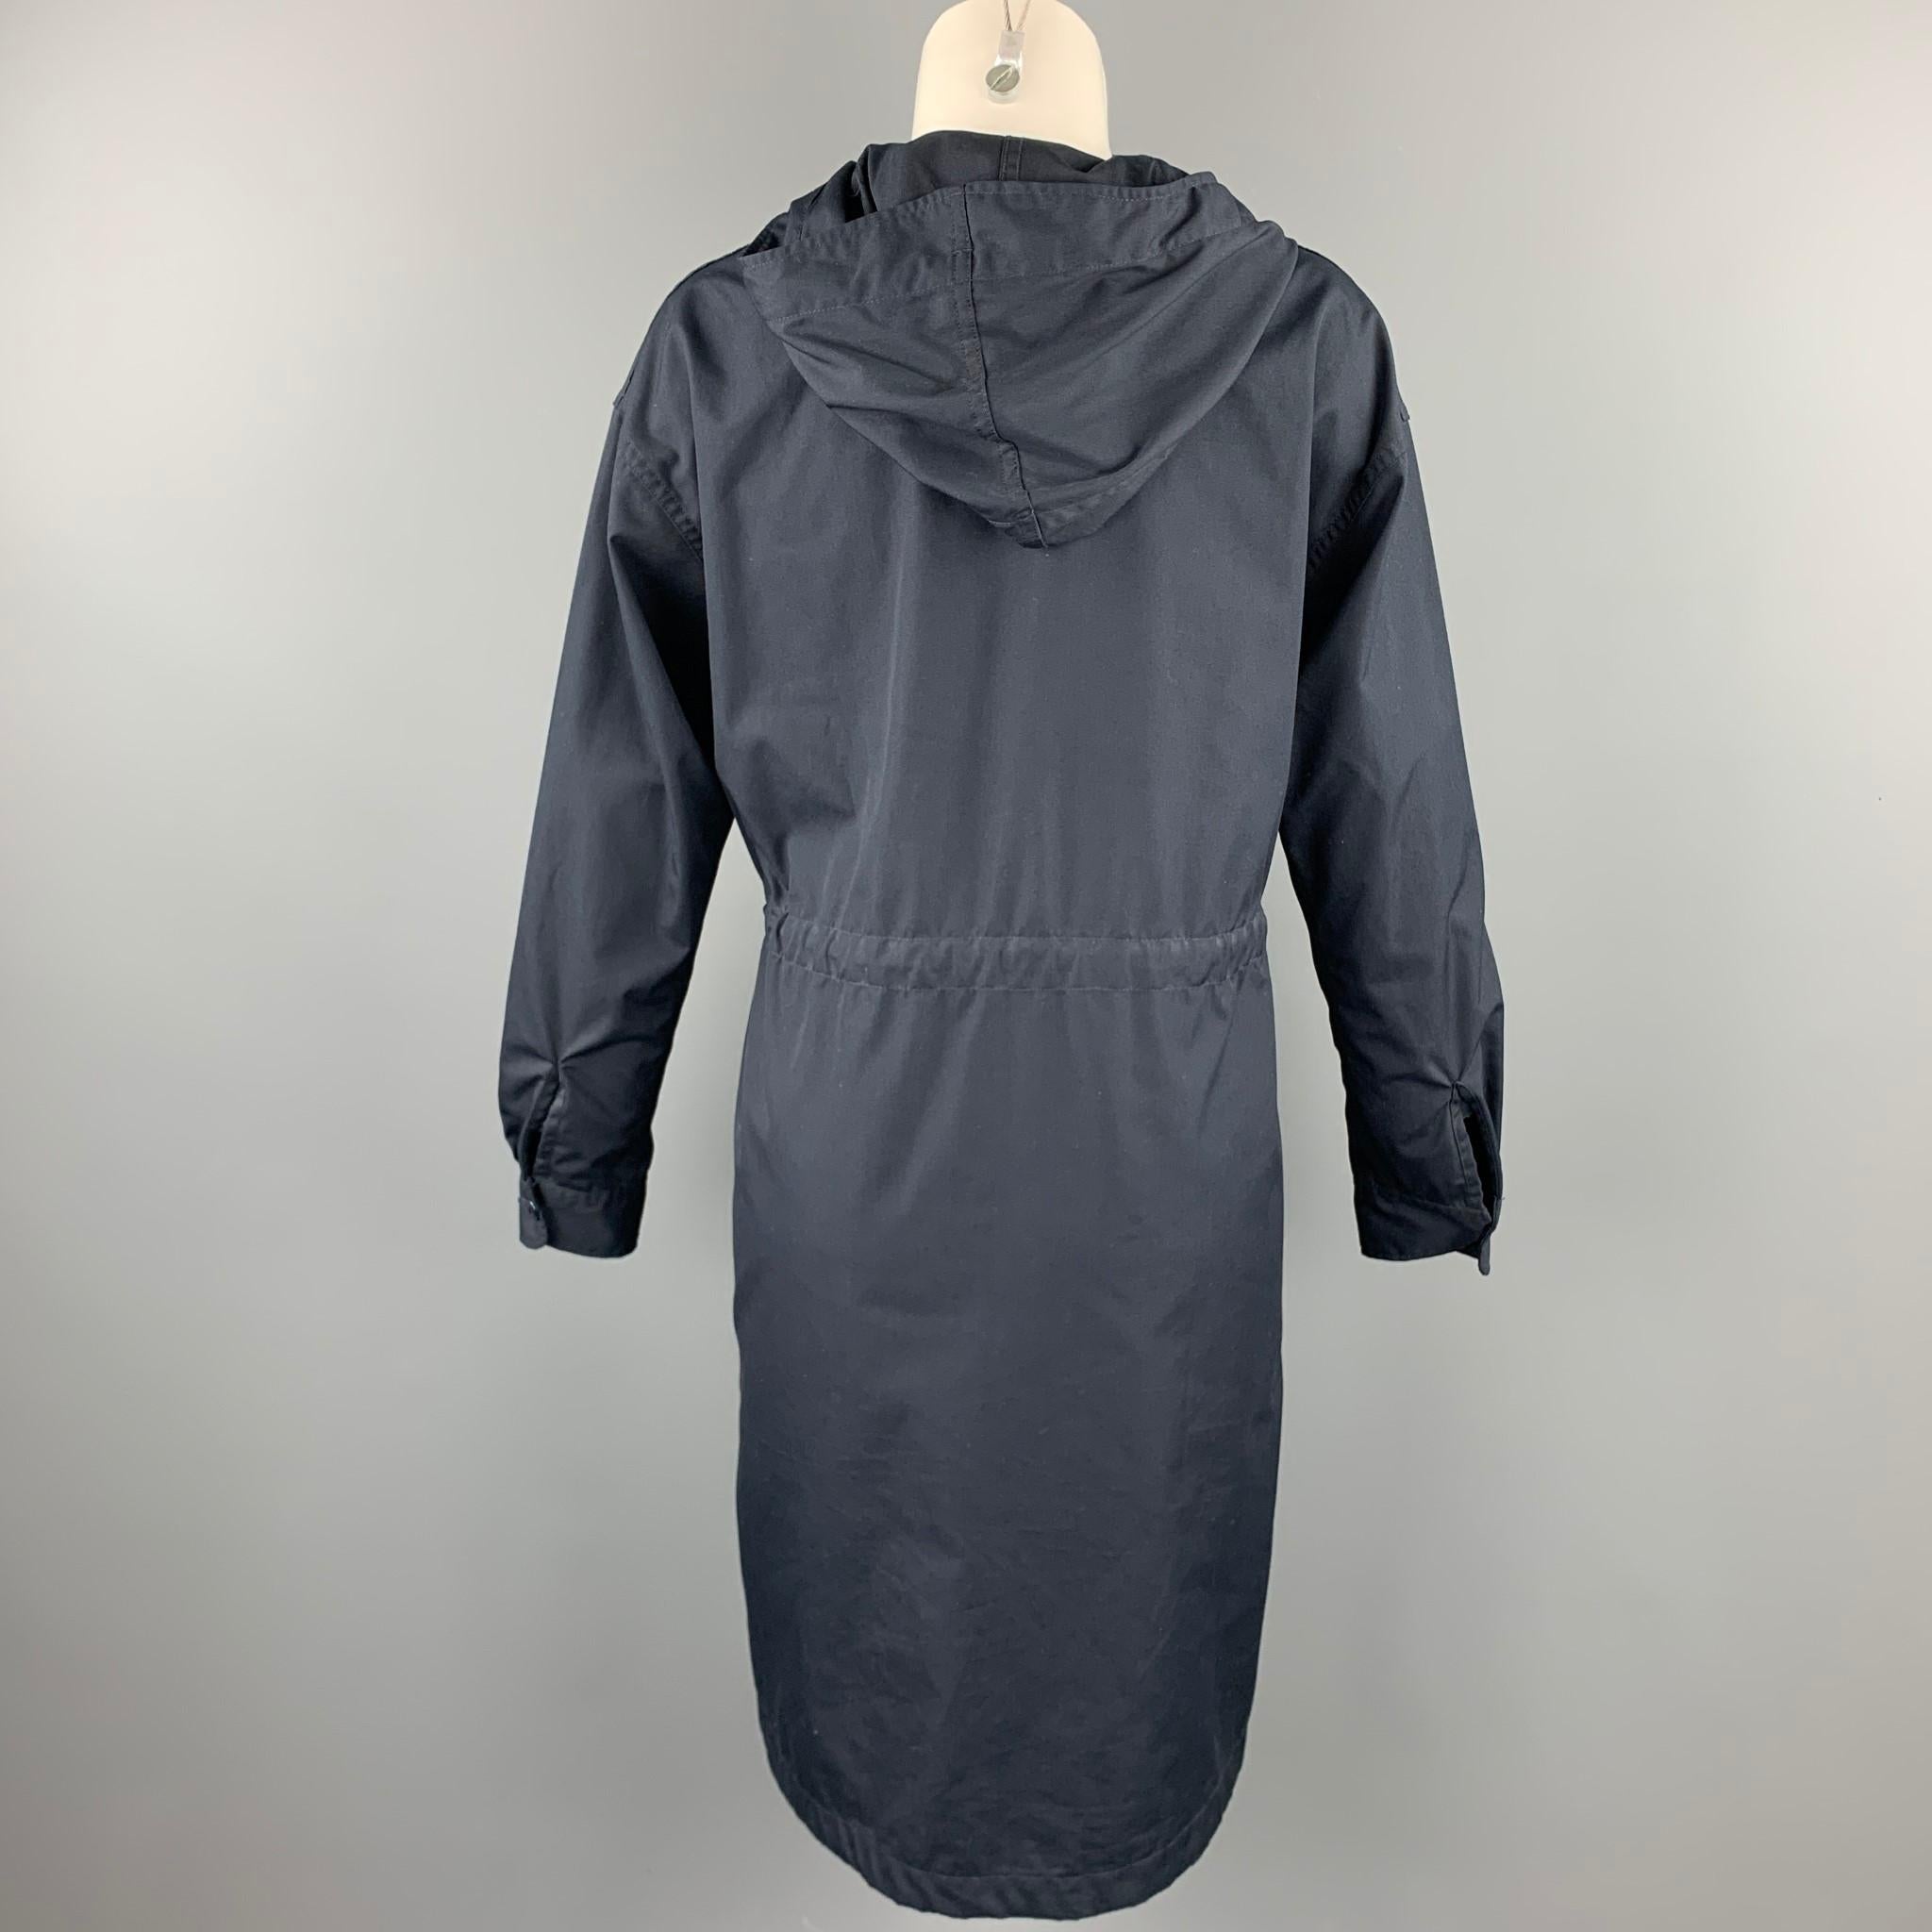 Women's ENGINEERED GARMENTS Size S Black Polyester / Cotton Shirt Dress